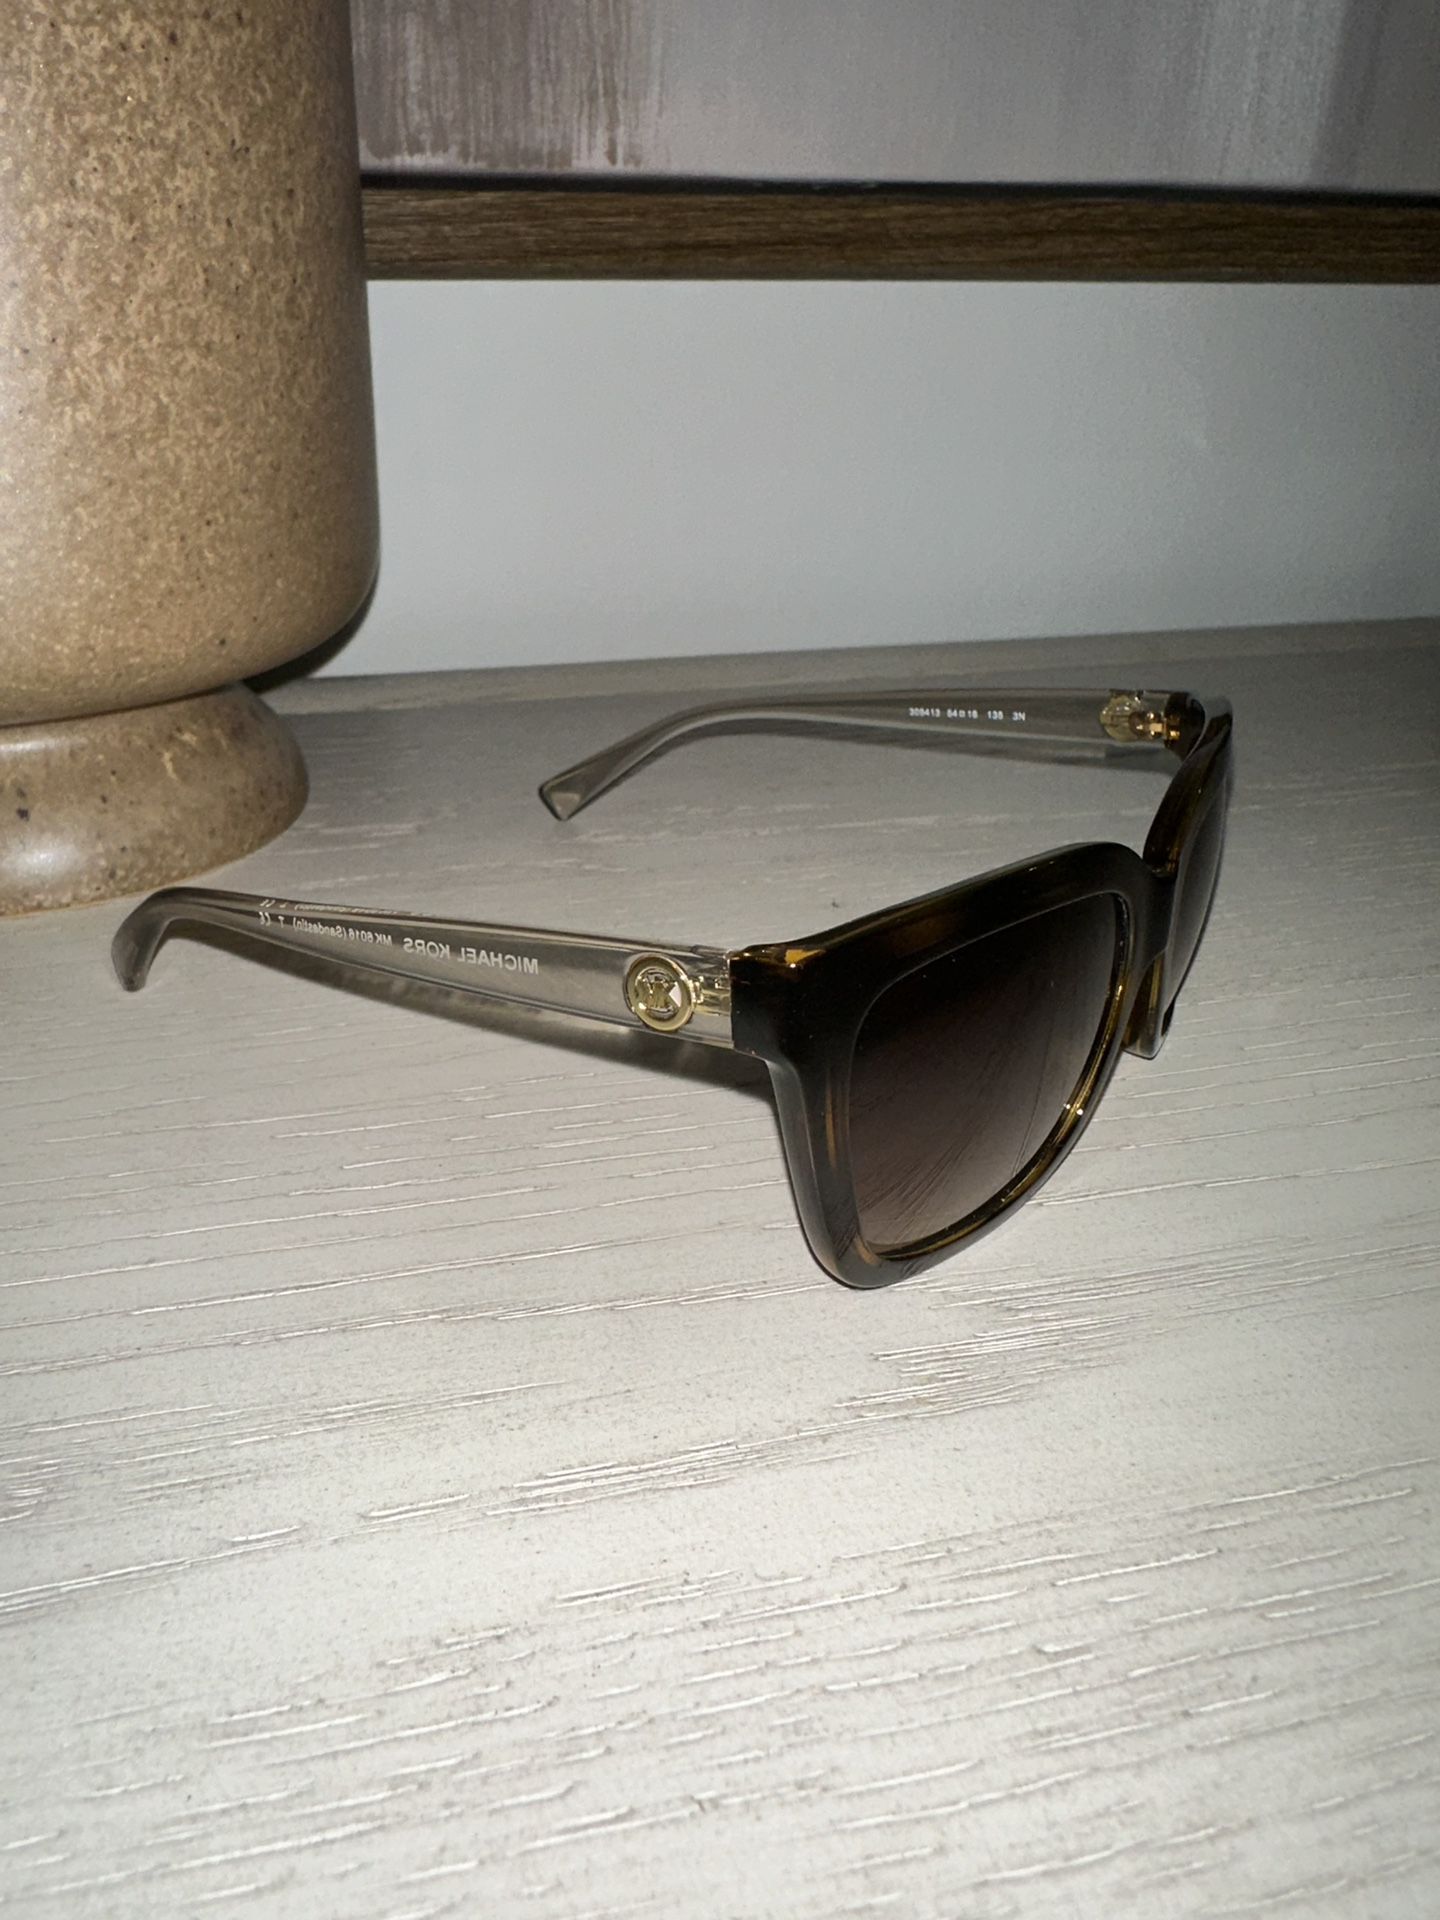 Michael Kors Sunglasses NEW PRICE (FIRM)